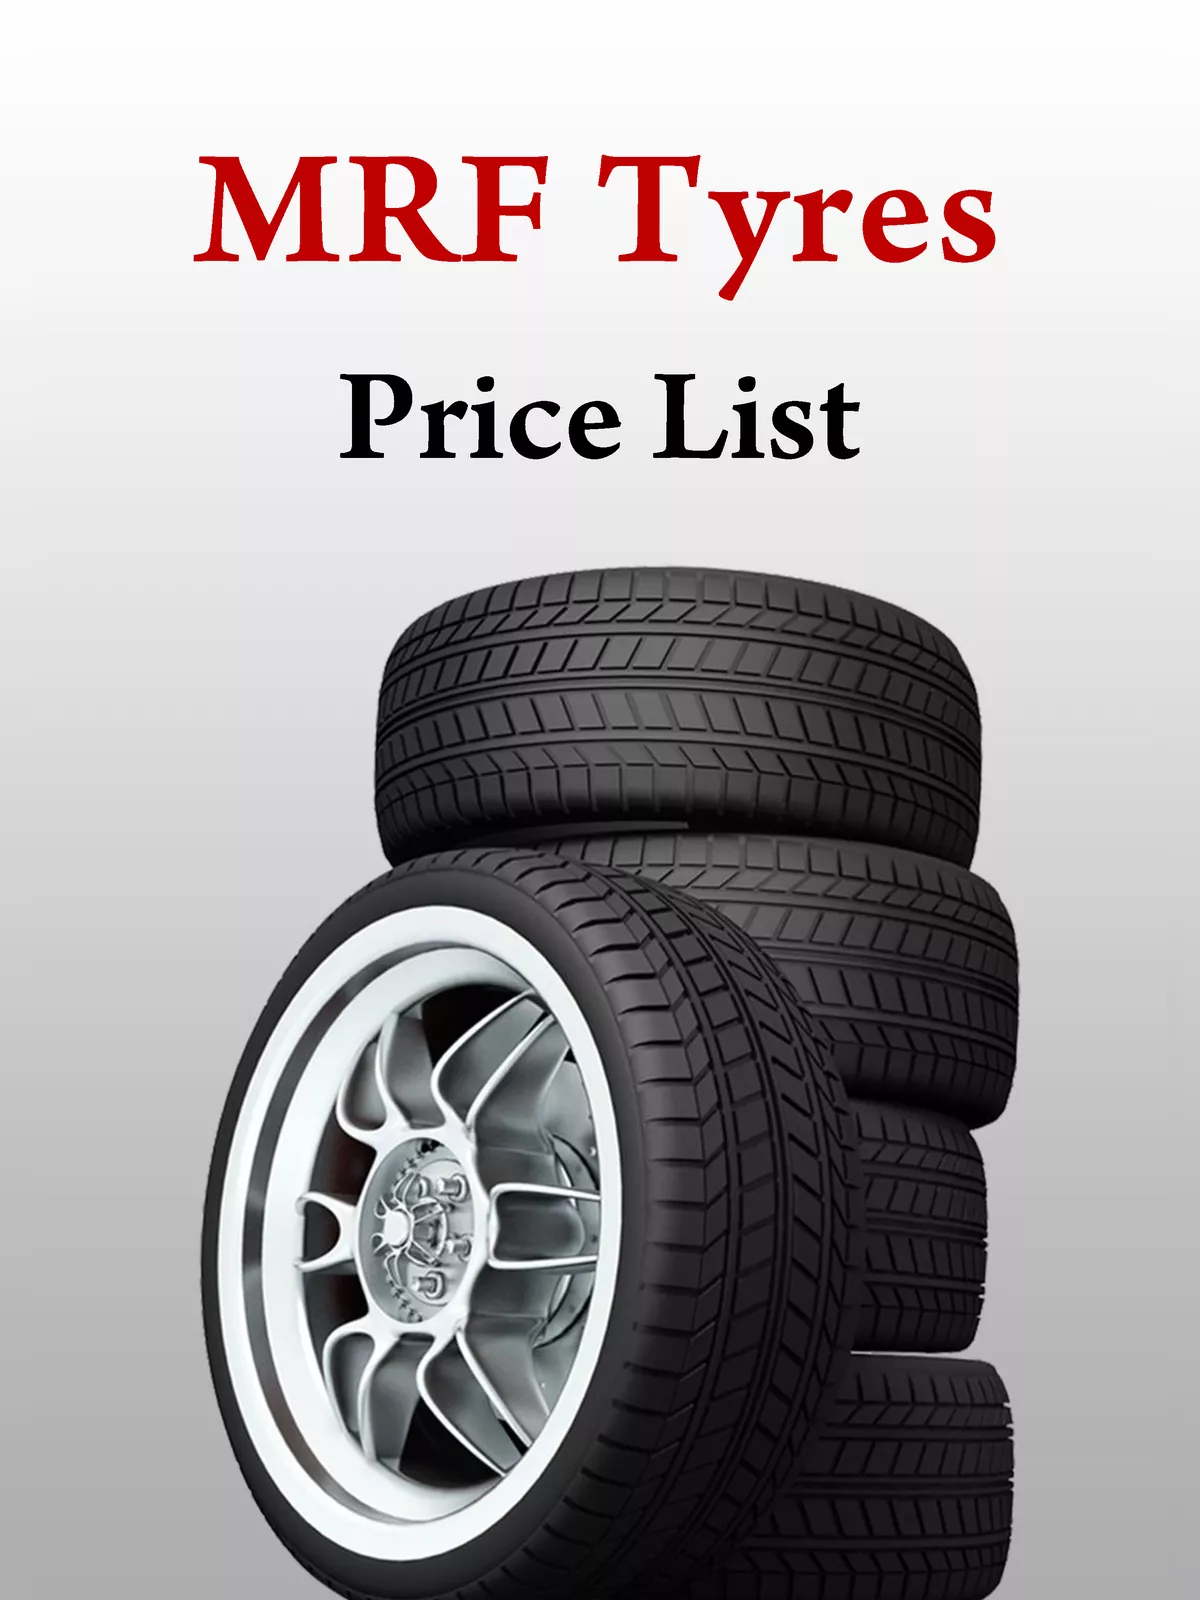 MRF Tyres Price List